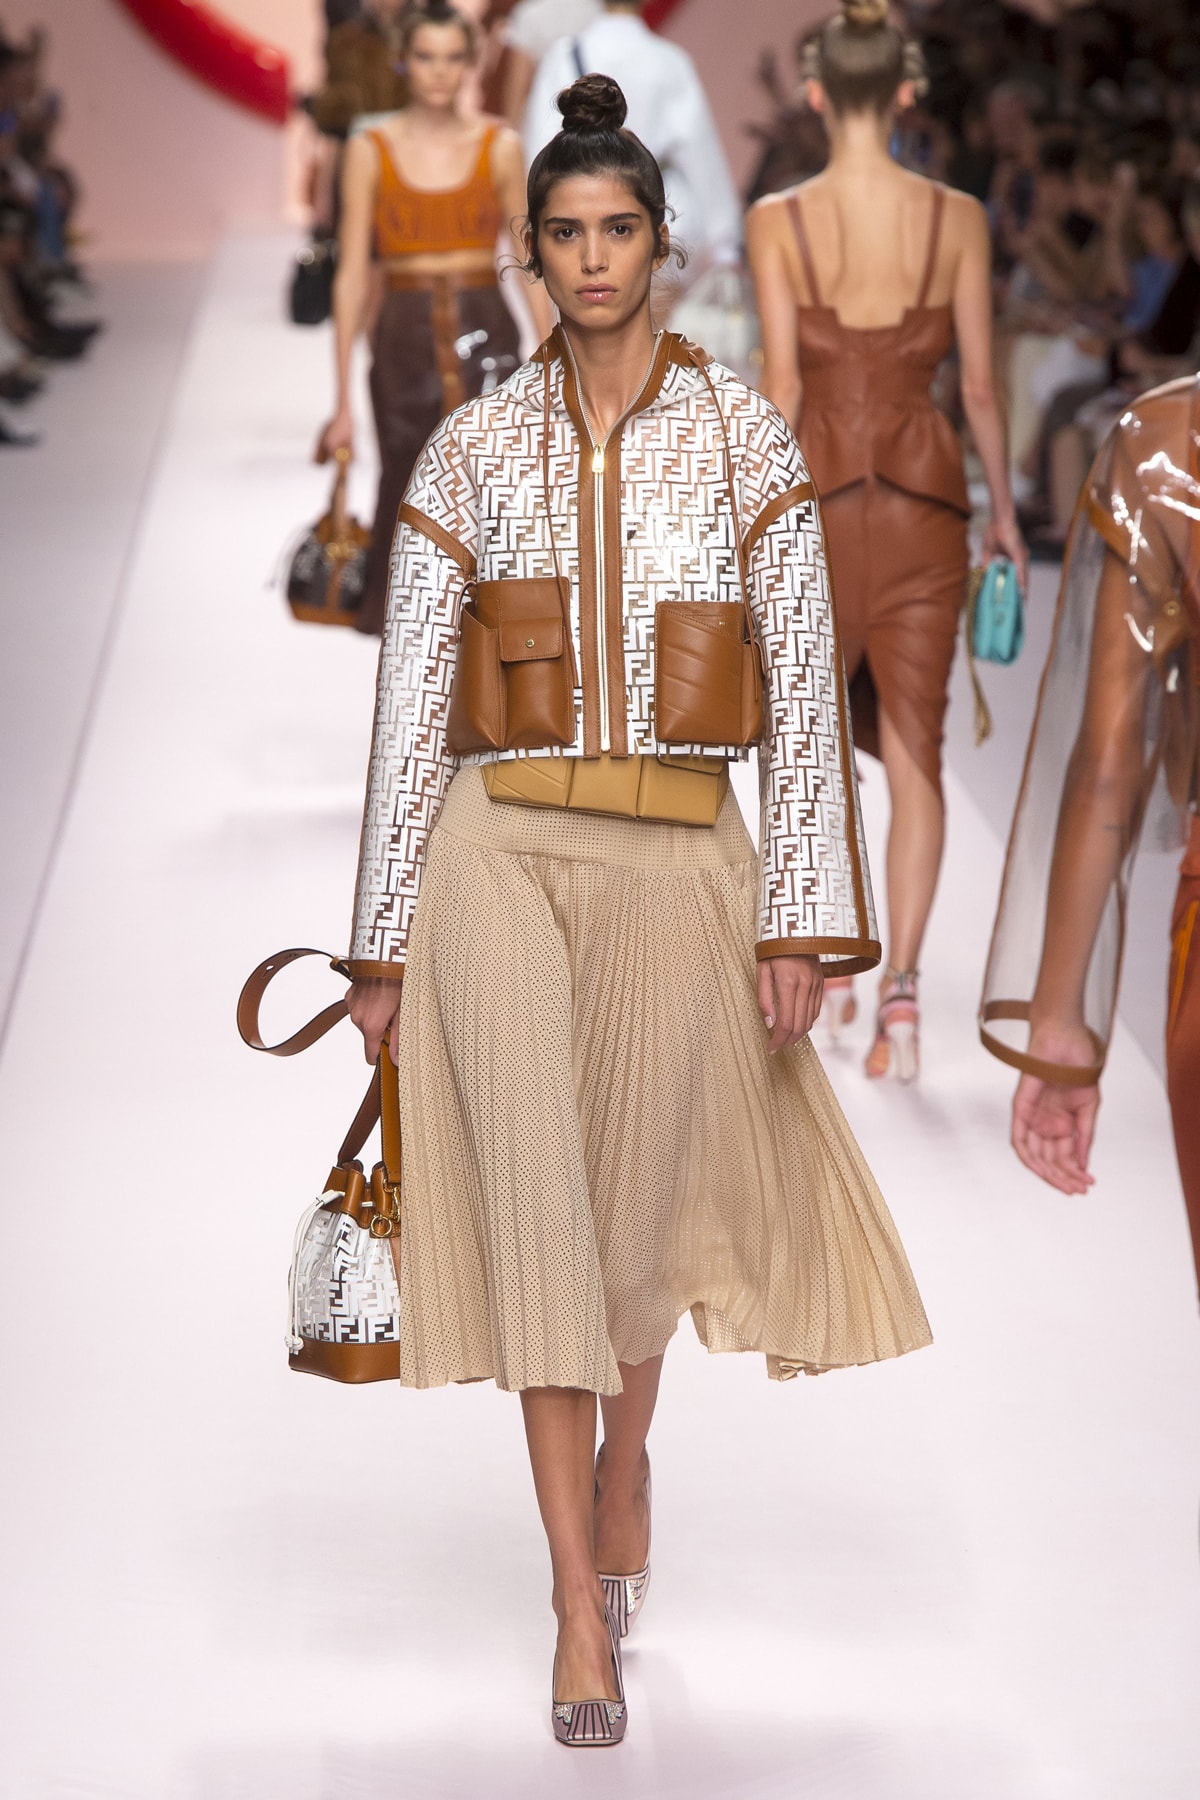 Fendi Karl Lagerfeld Spring Summer 2019 Milan Fashion Week Show Collection Jacket White Skirt Khaki